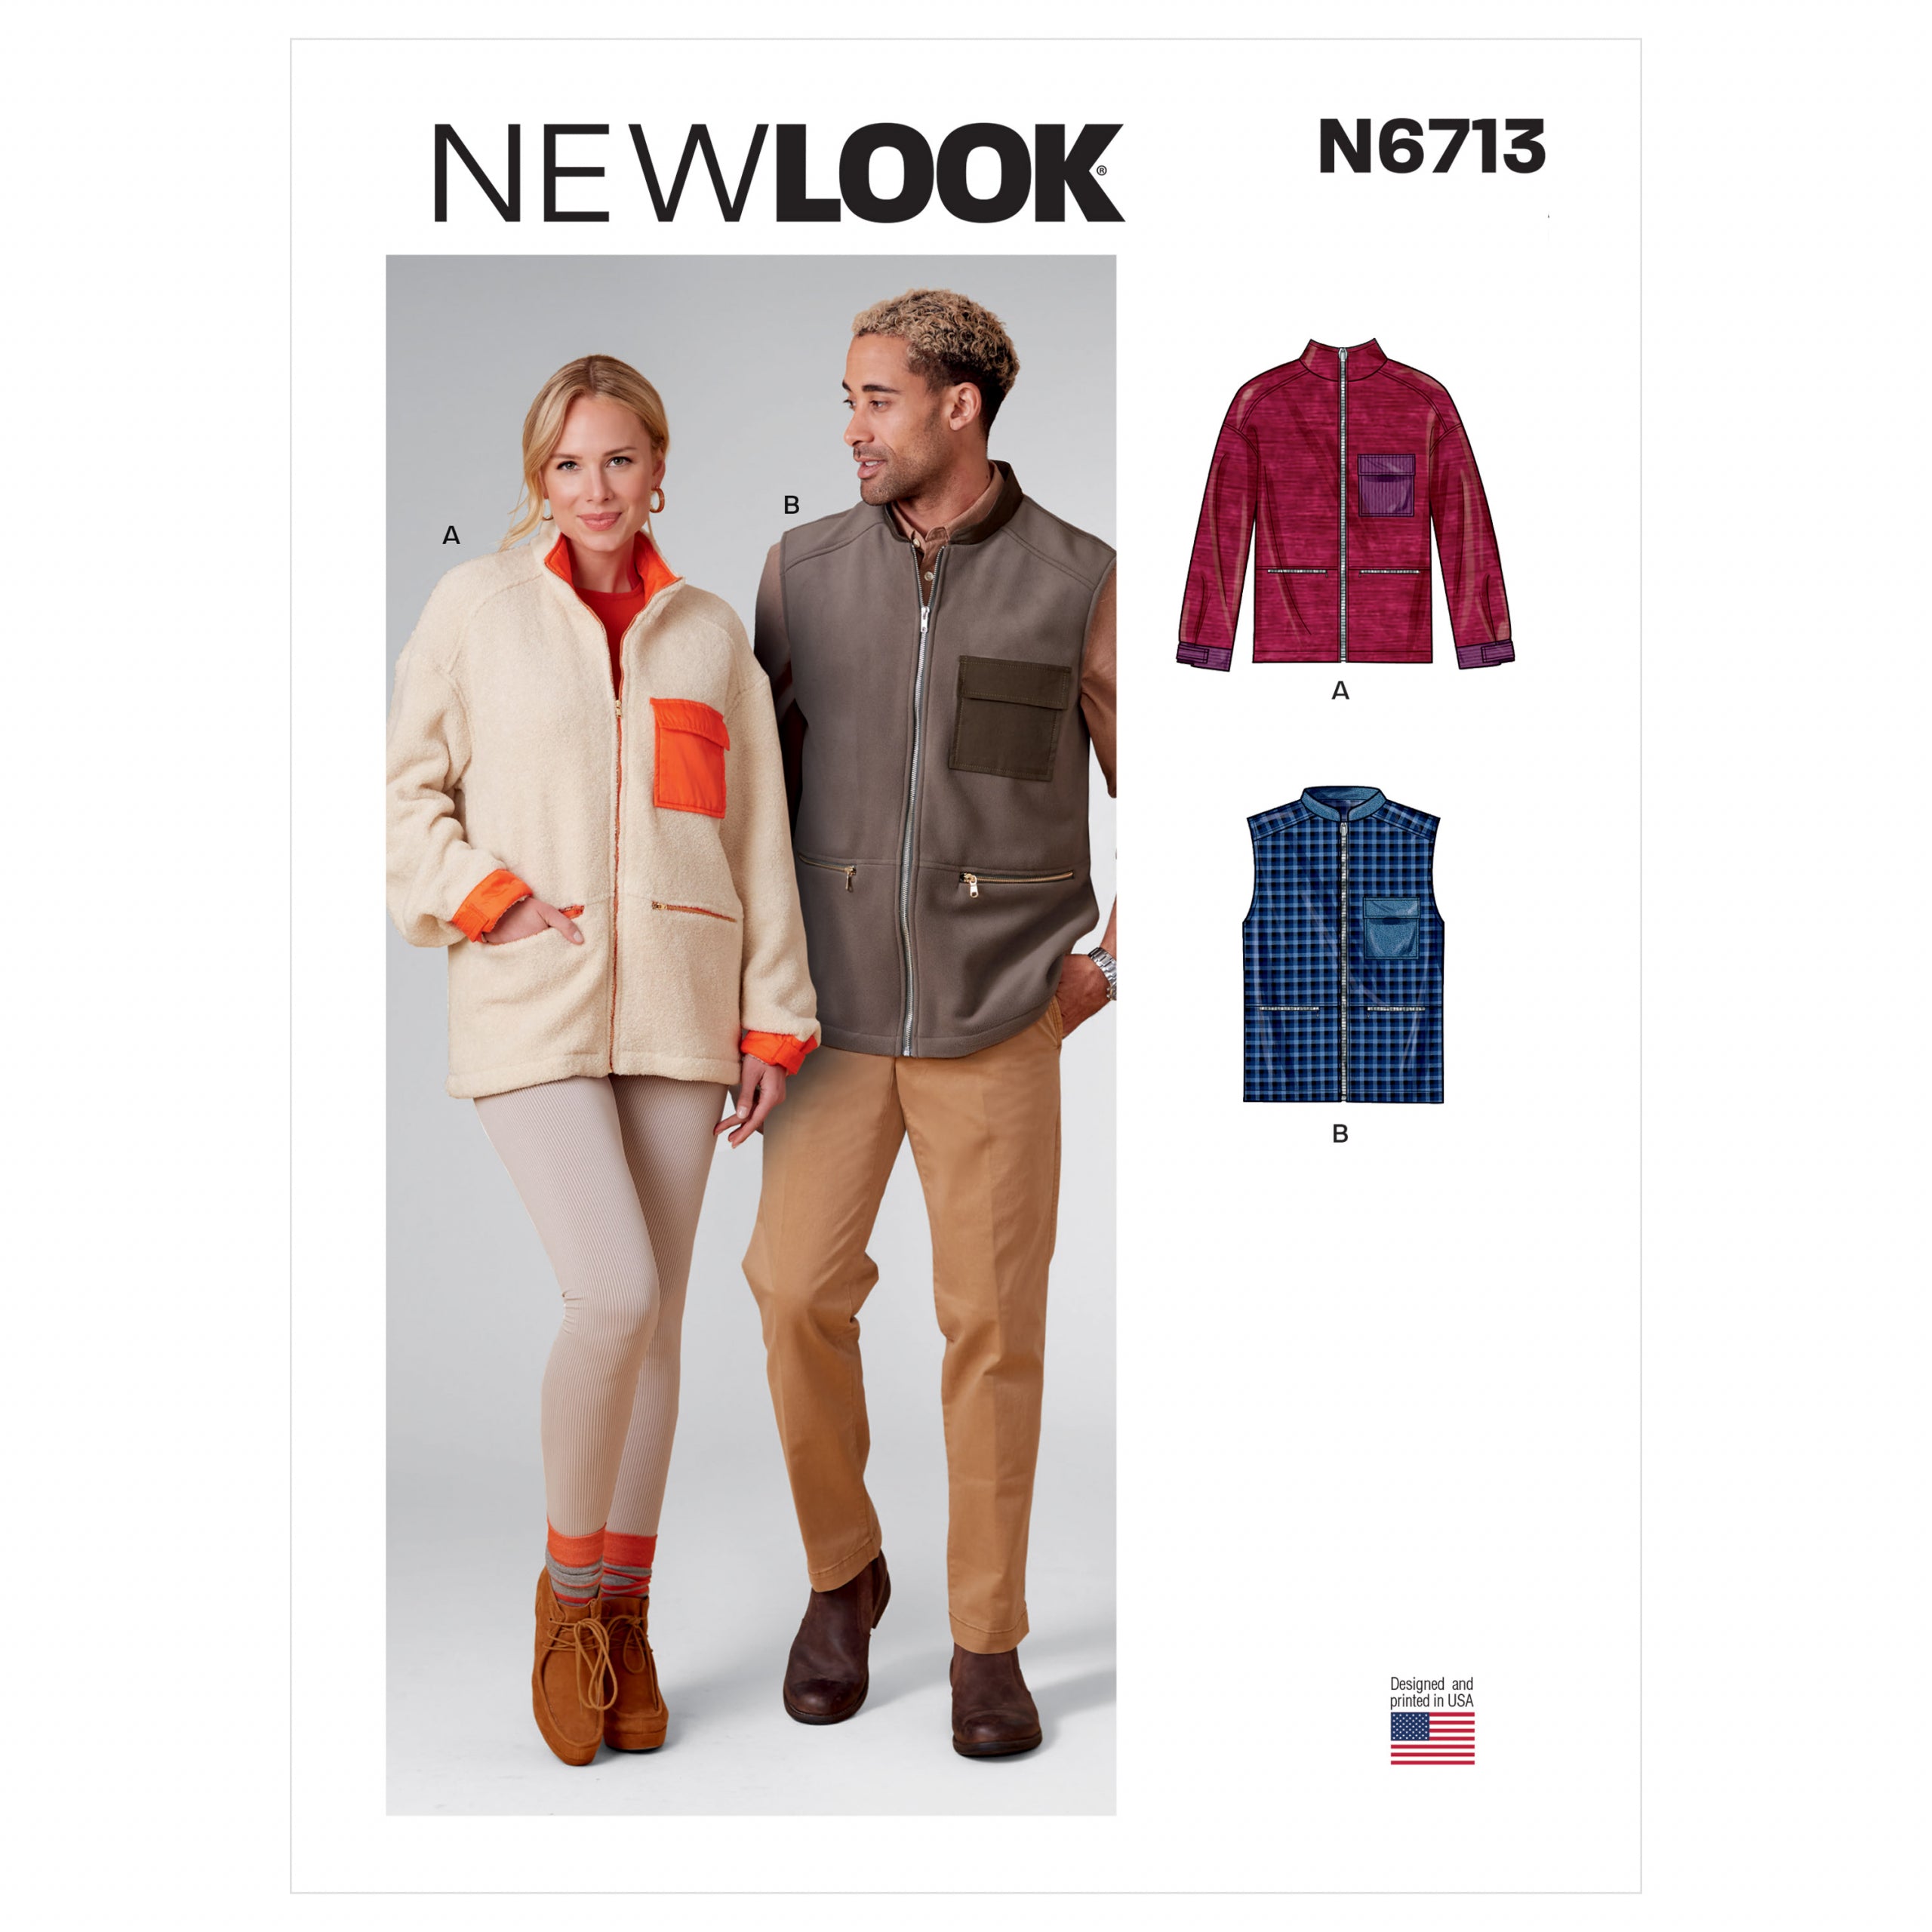 New Look Unisex Jacket and Waistcoat N6713